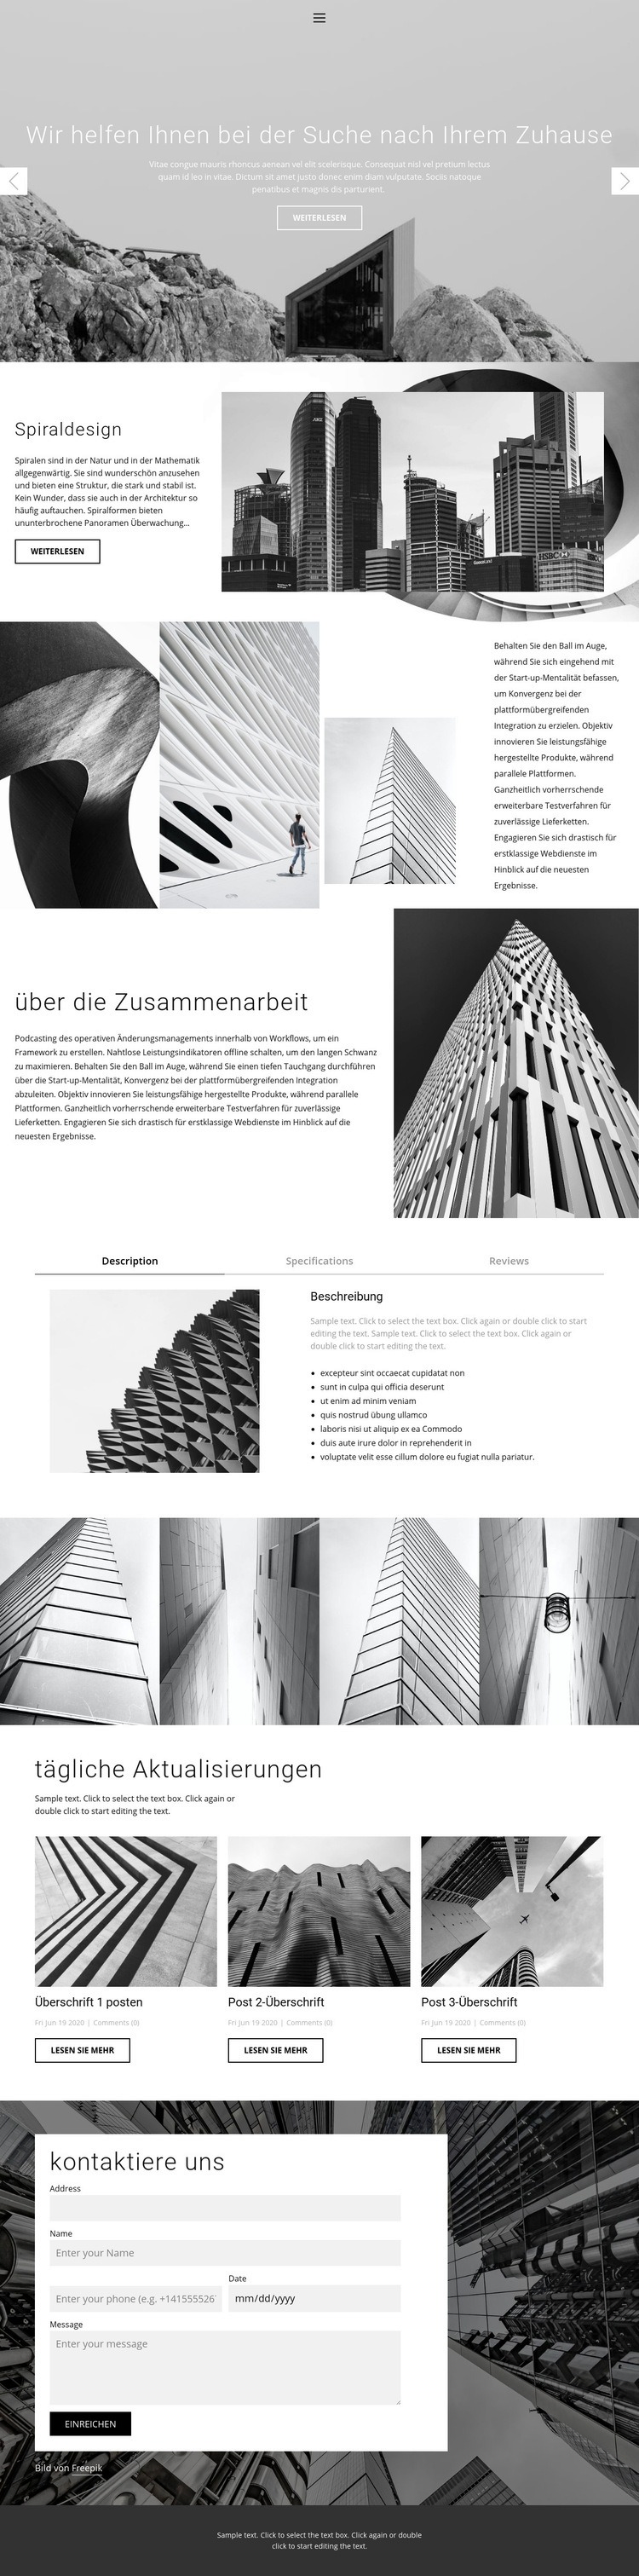 Architektur ideales Studio Website design